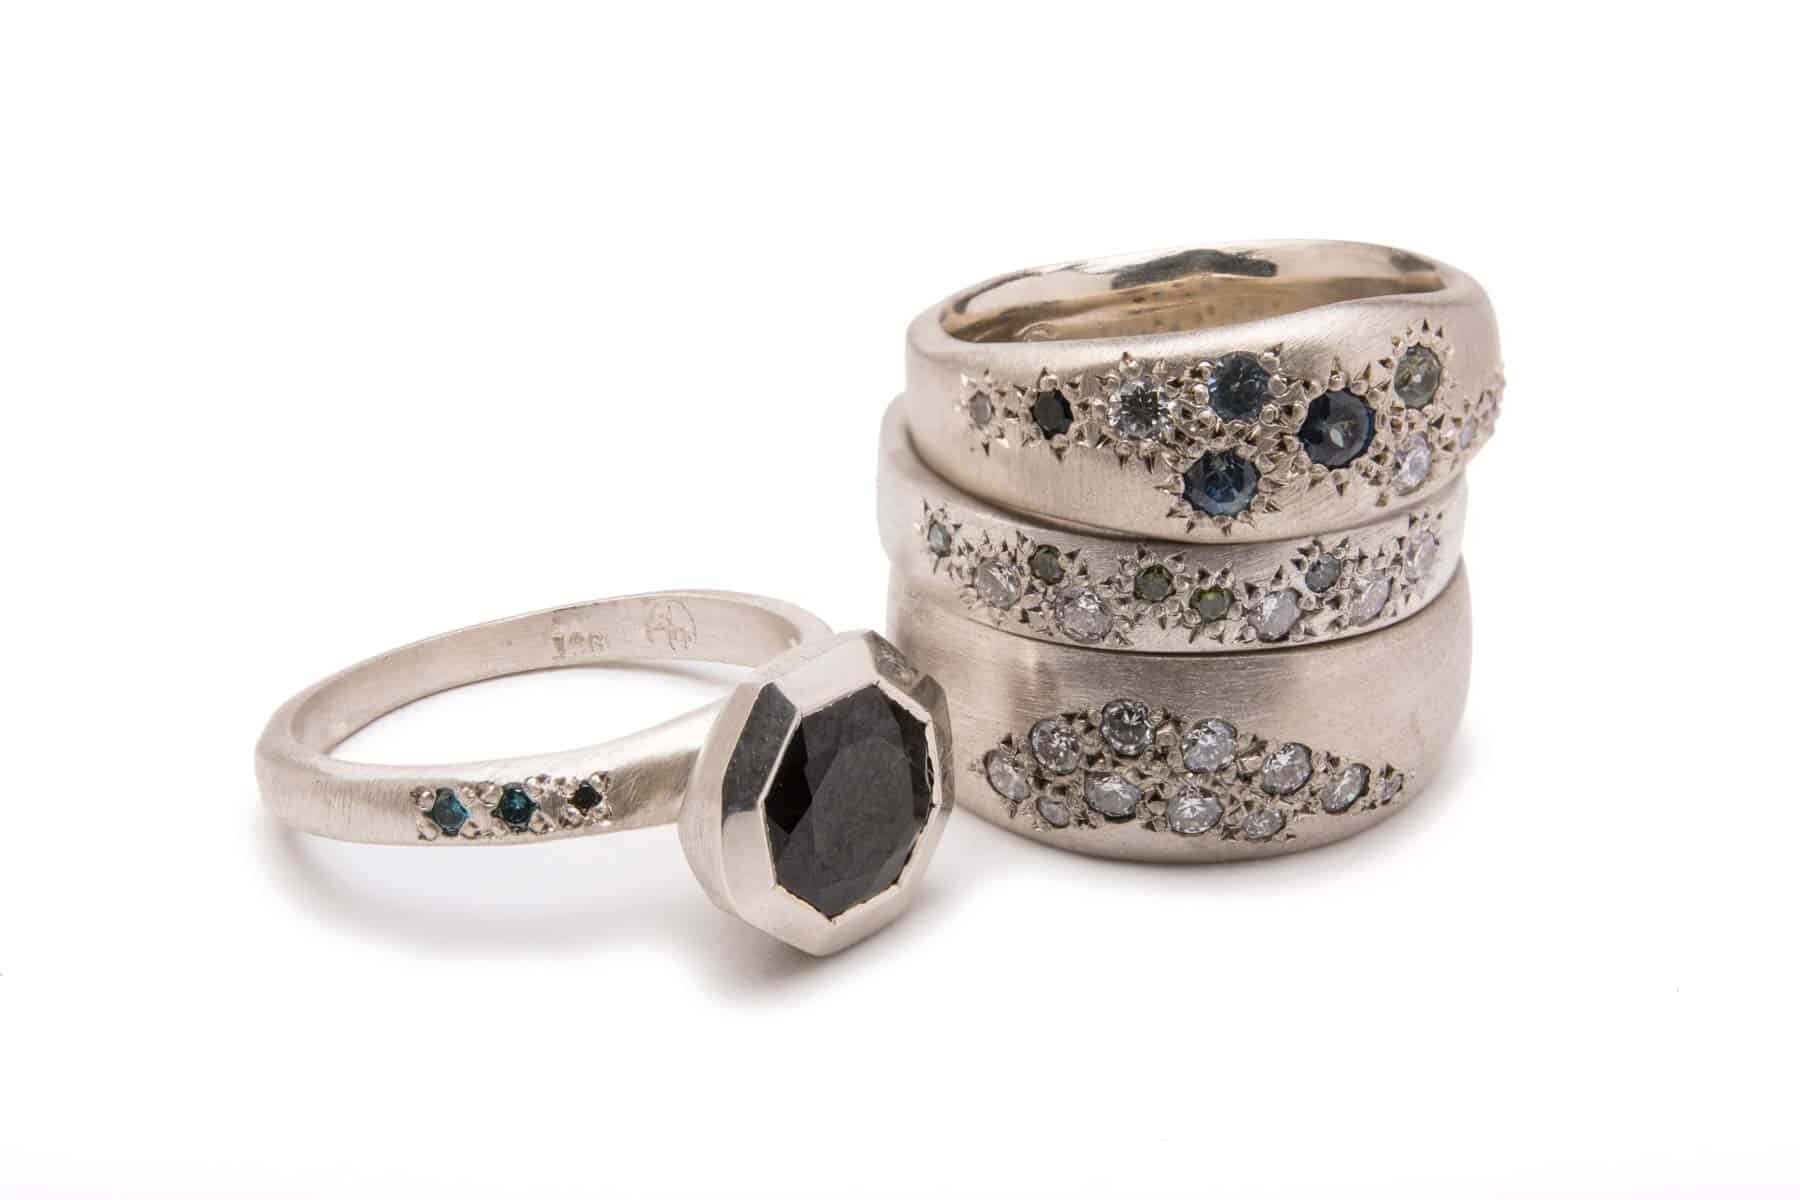 black diamond engagement rings